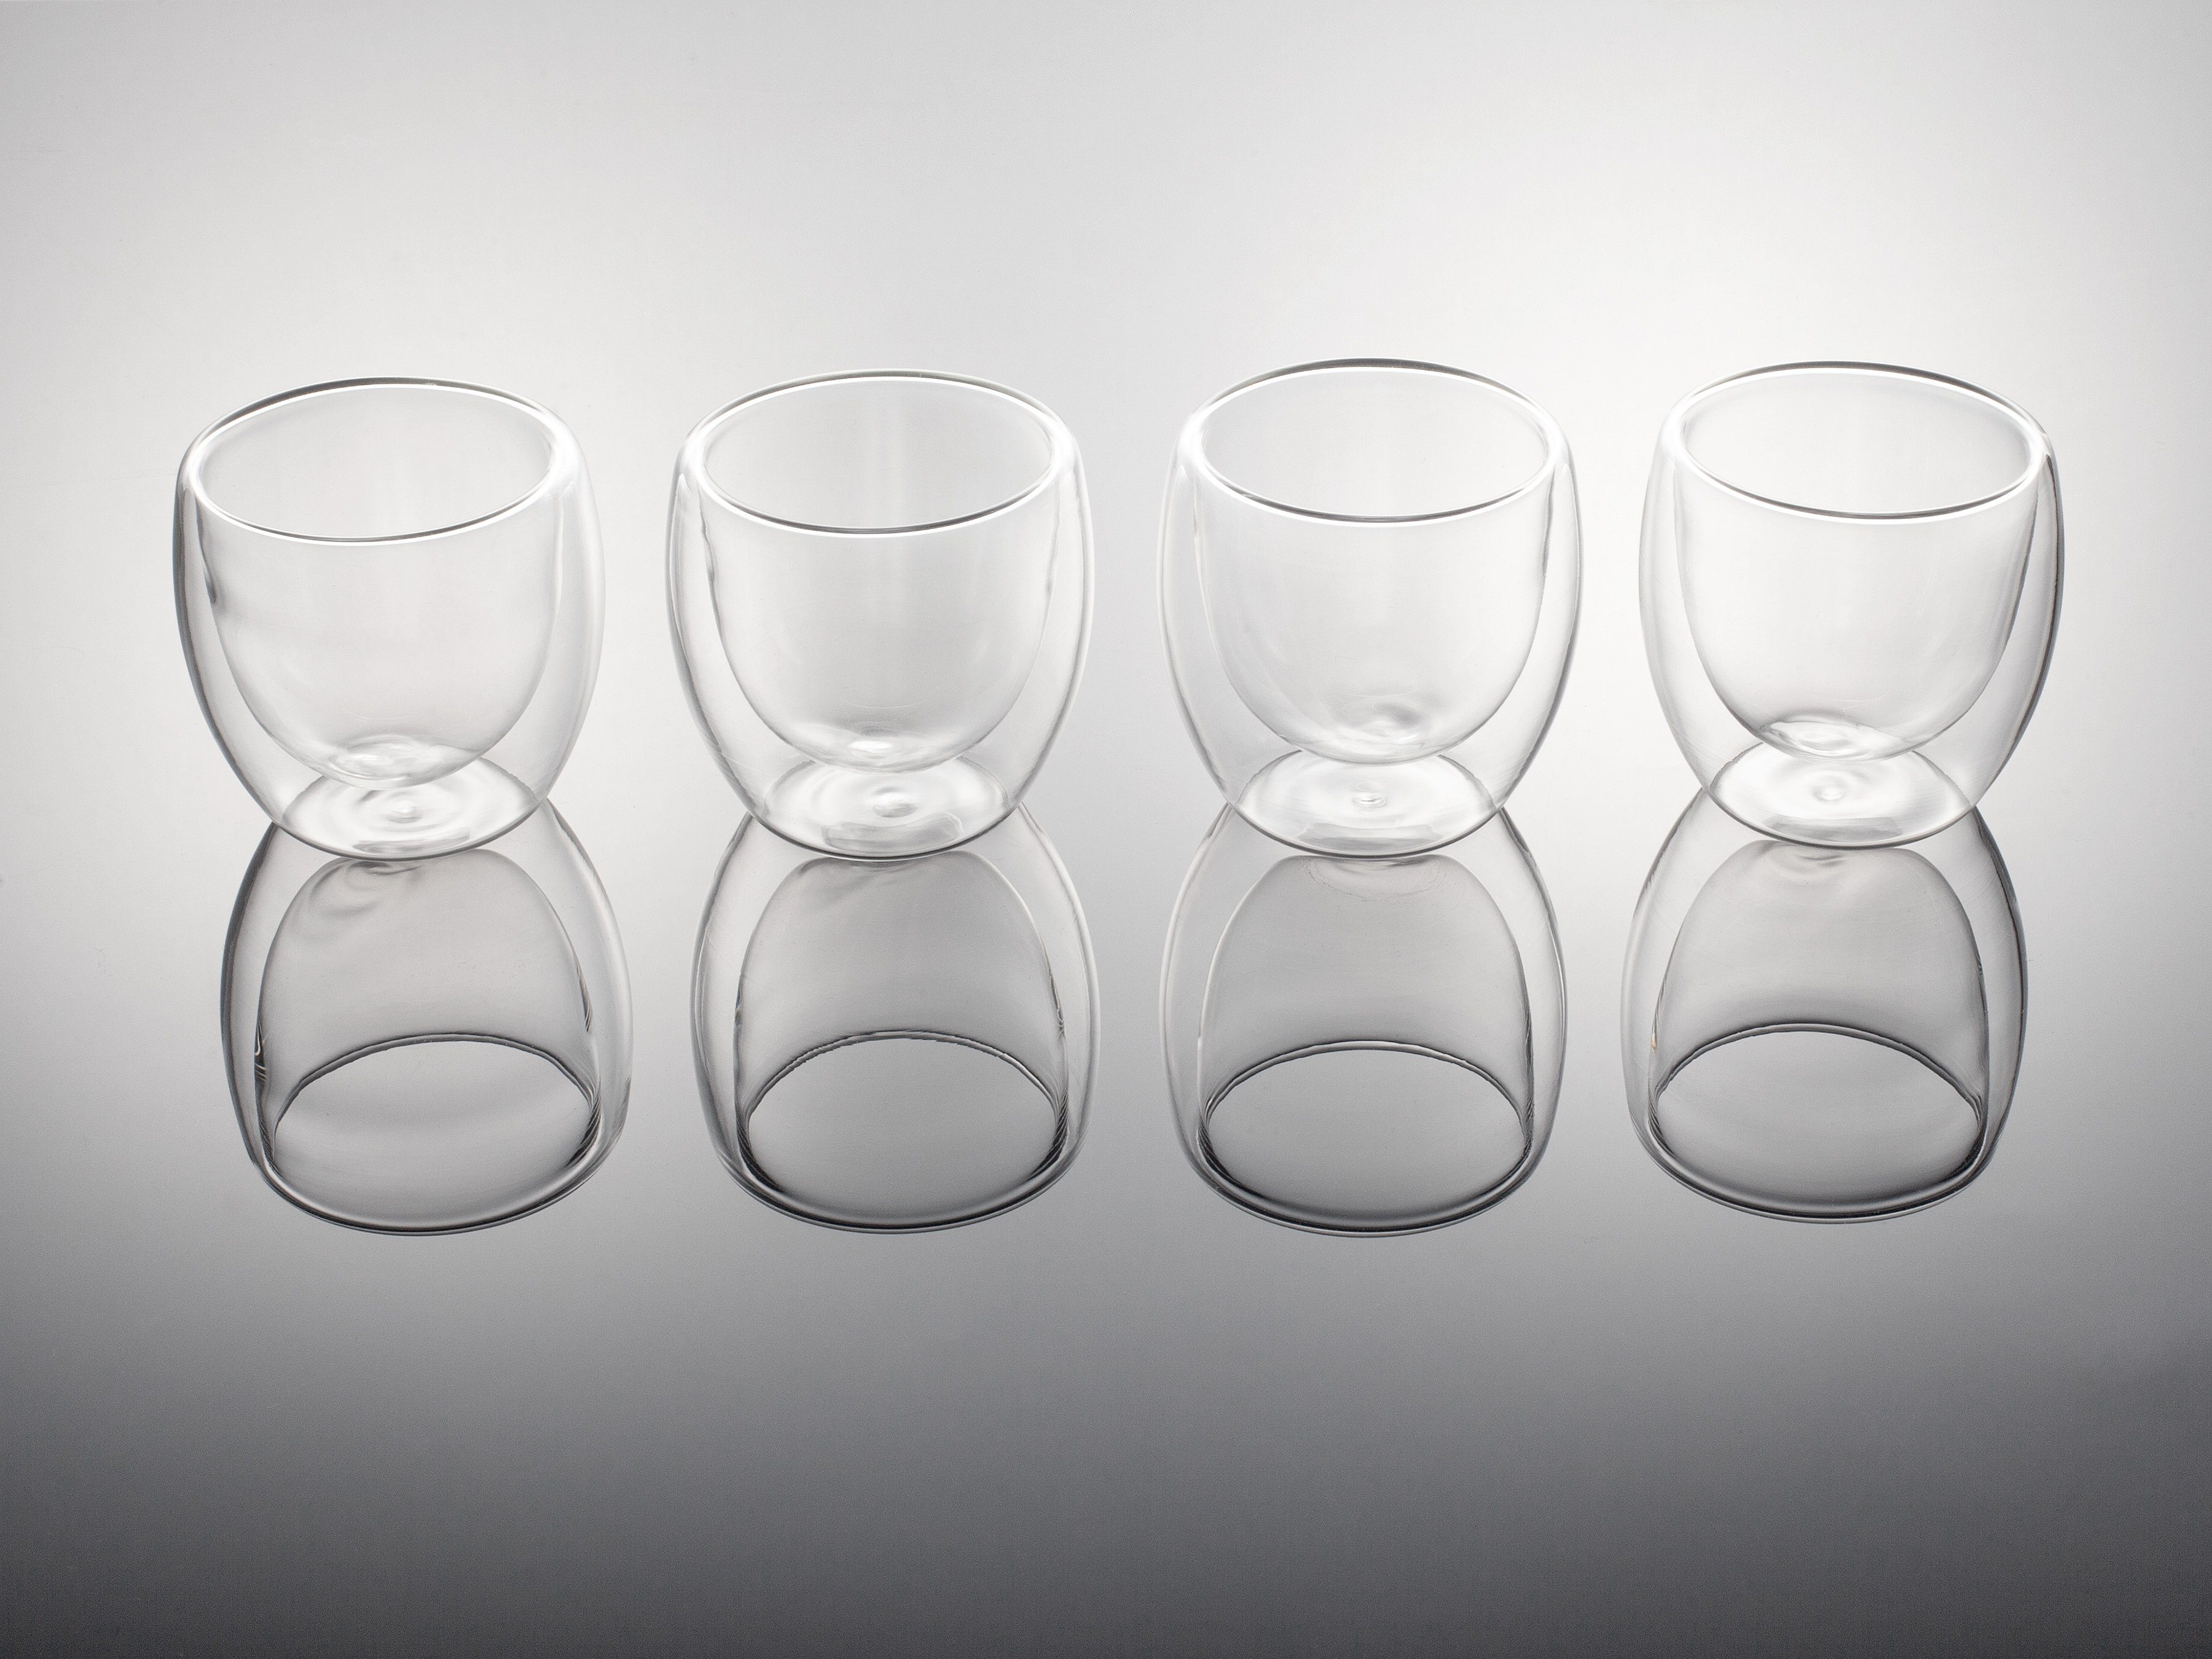 Hanseküche Espressoglas Doppelwandige Espressotassen 4er Set (4x80ml), Borosilikatglas, Hartes Borosilikatglas, Wärmehaltend